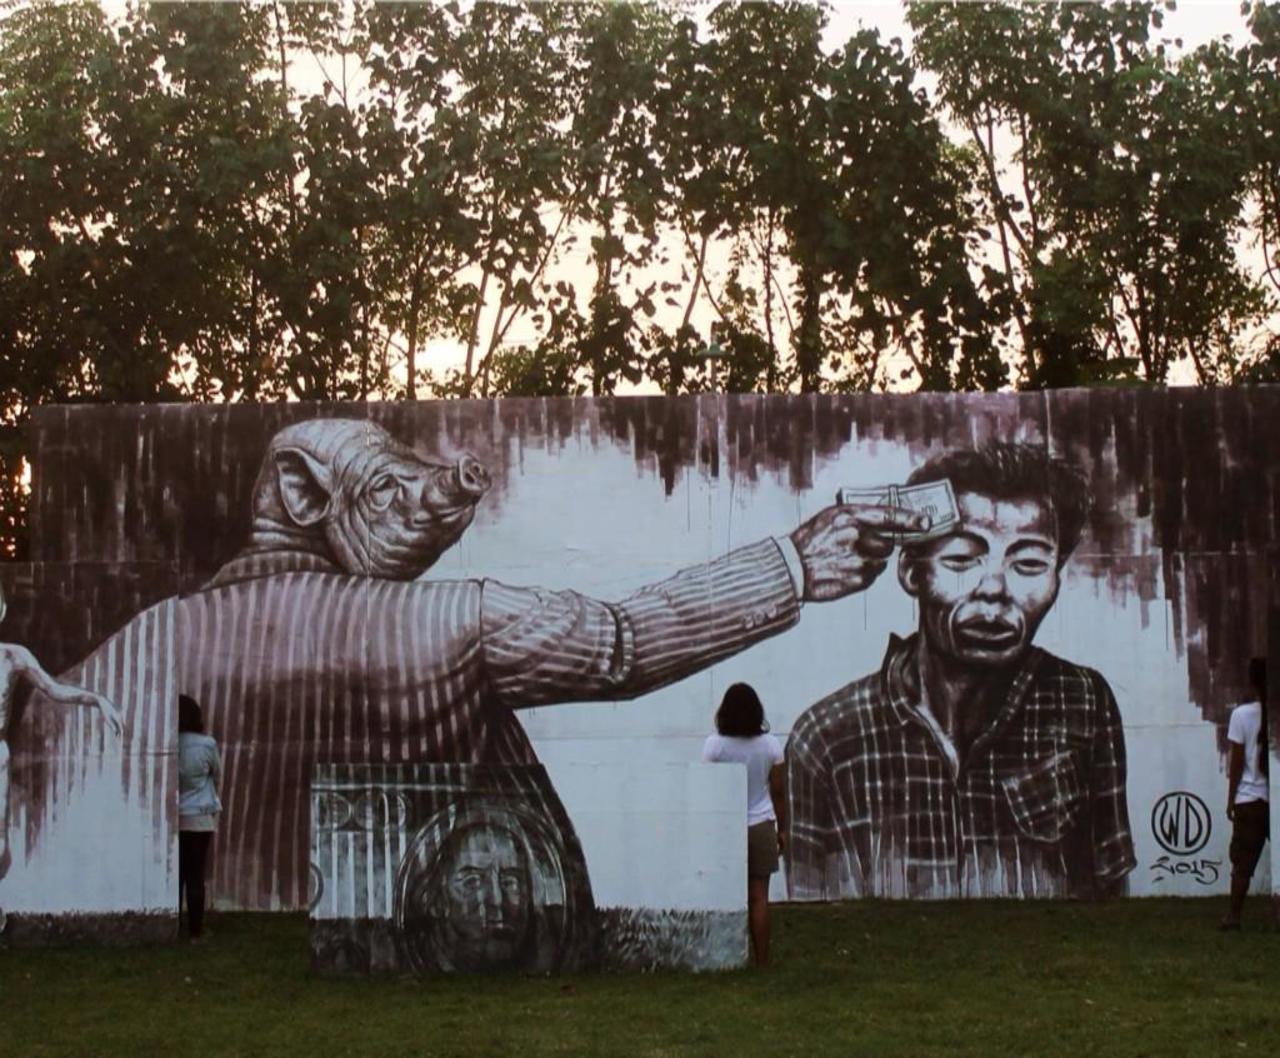 'Money Kills'
Street Art by the artist WD

#art #arte #graffiti #streetart http://t.co/wL33NfmUnV